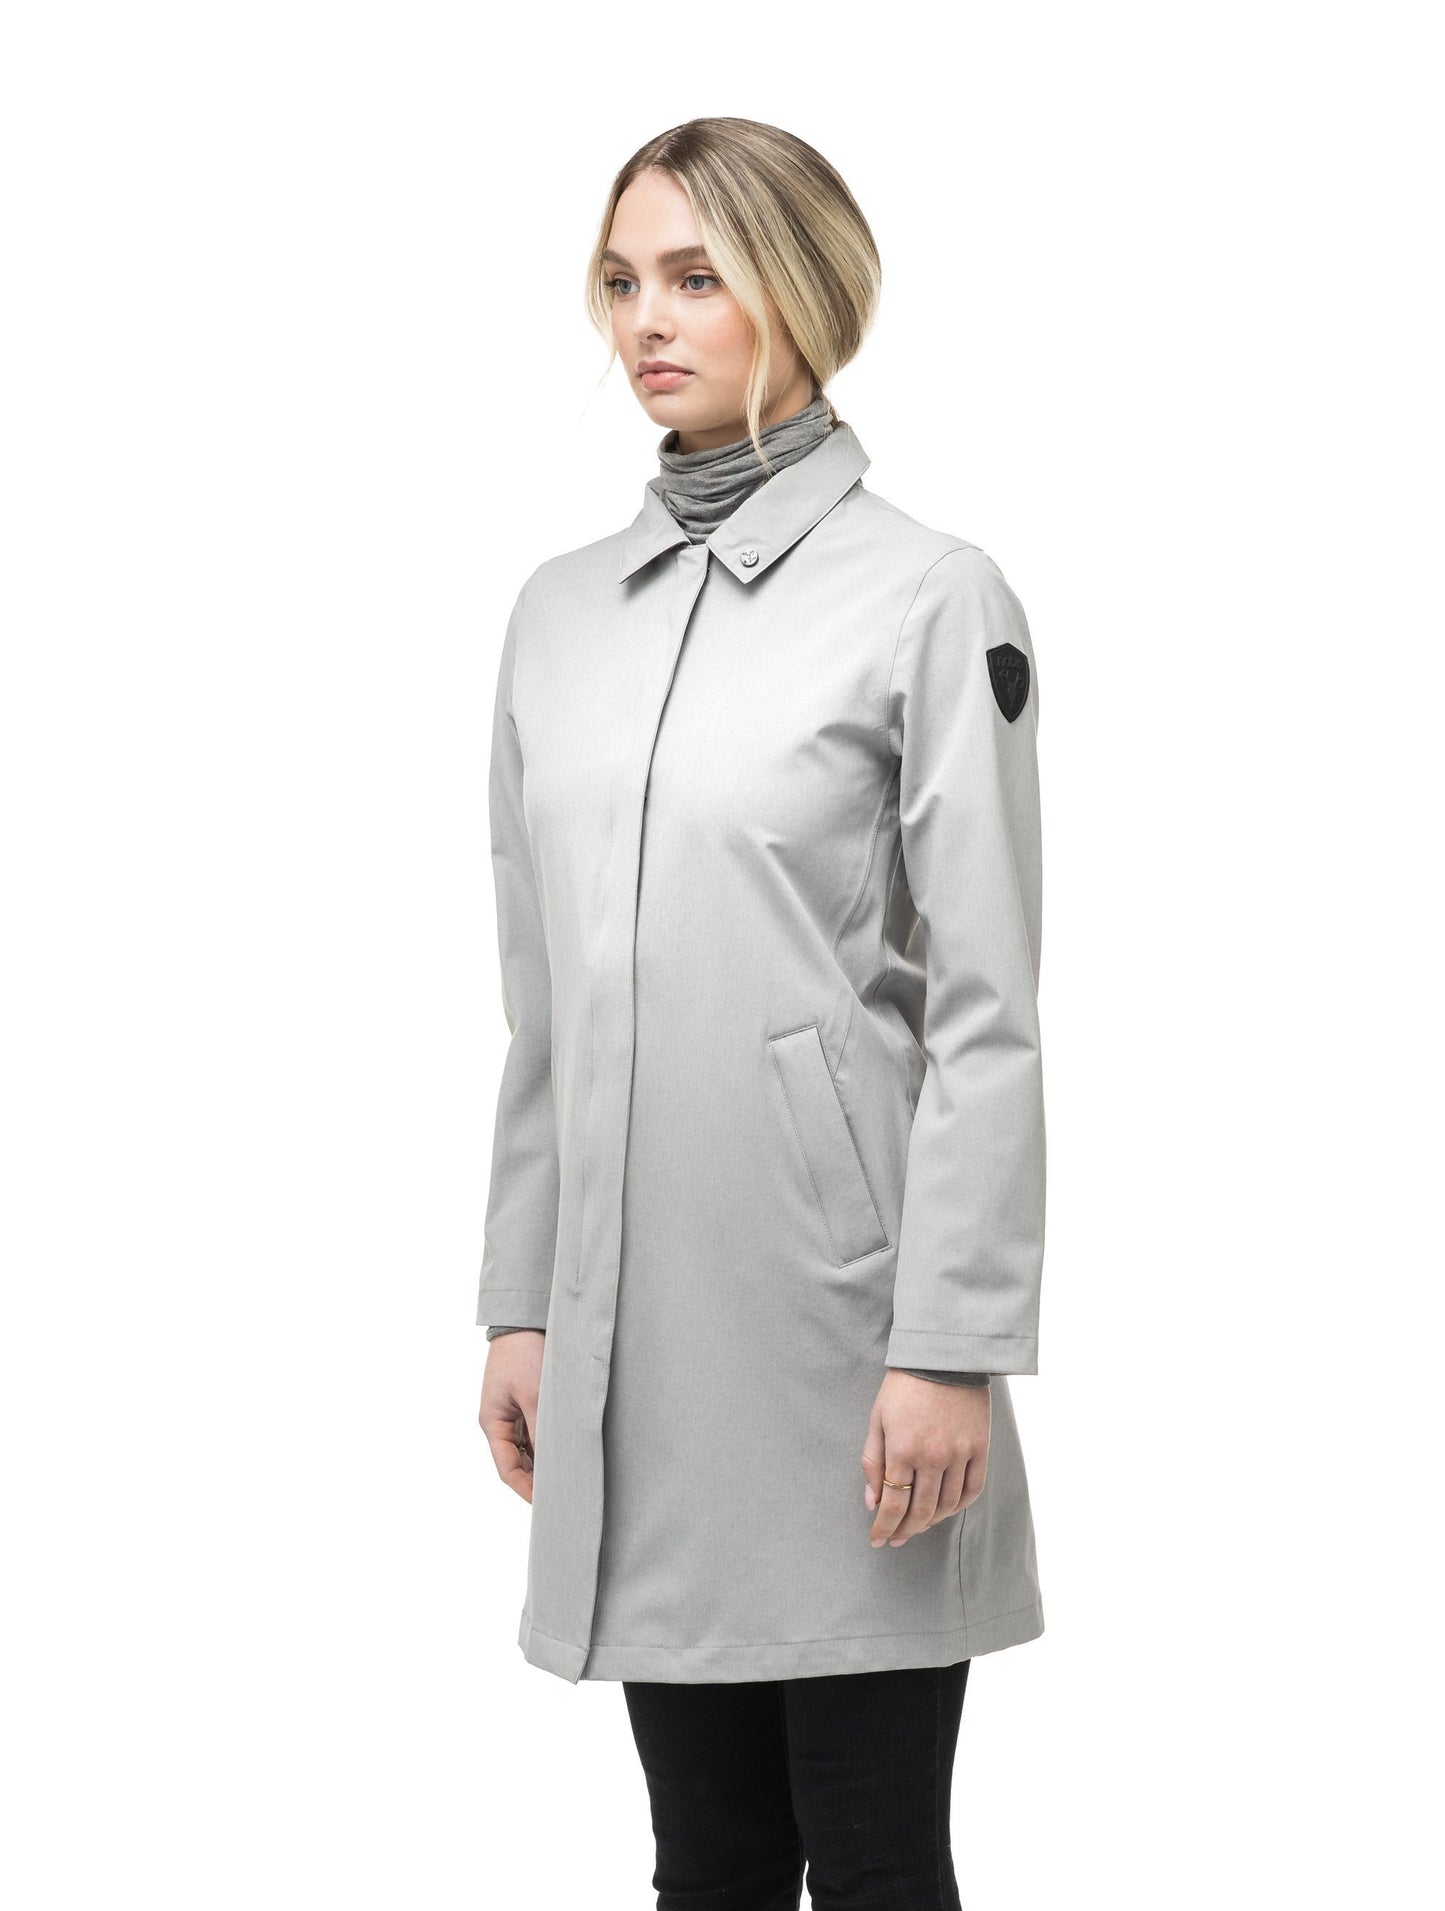 Women's thigh length collared rain jacket in Light Grey